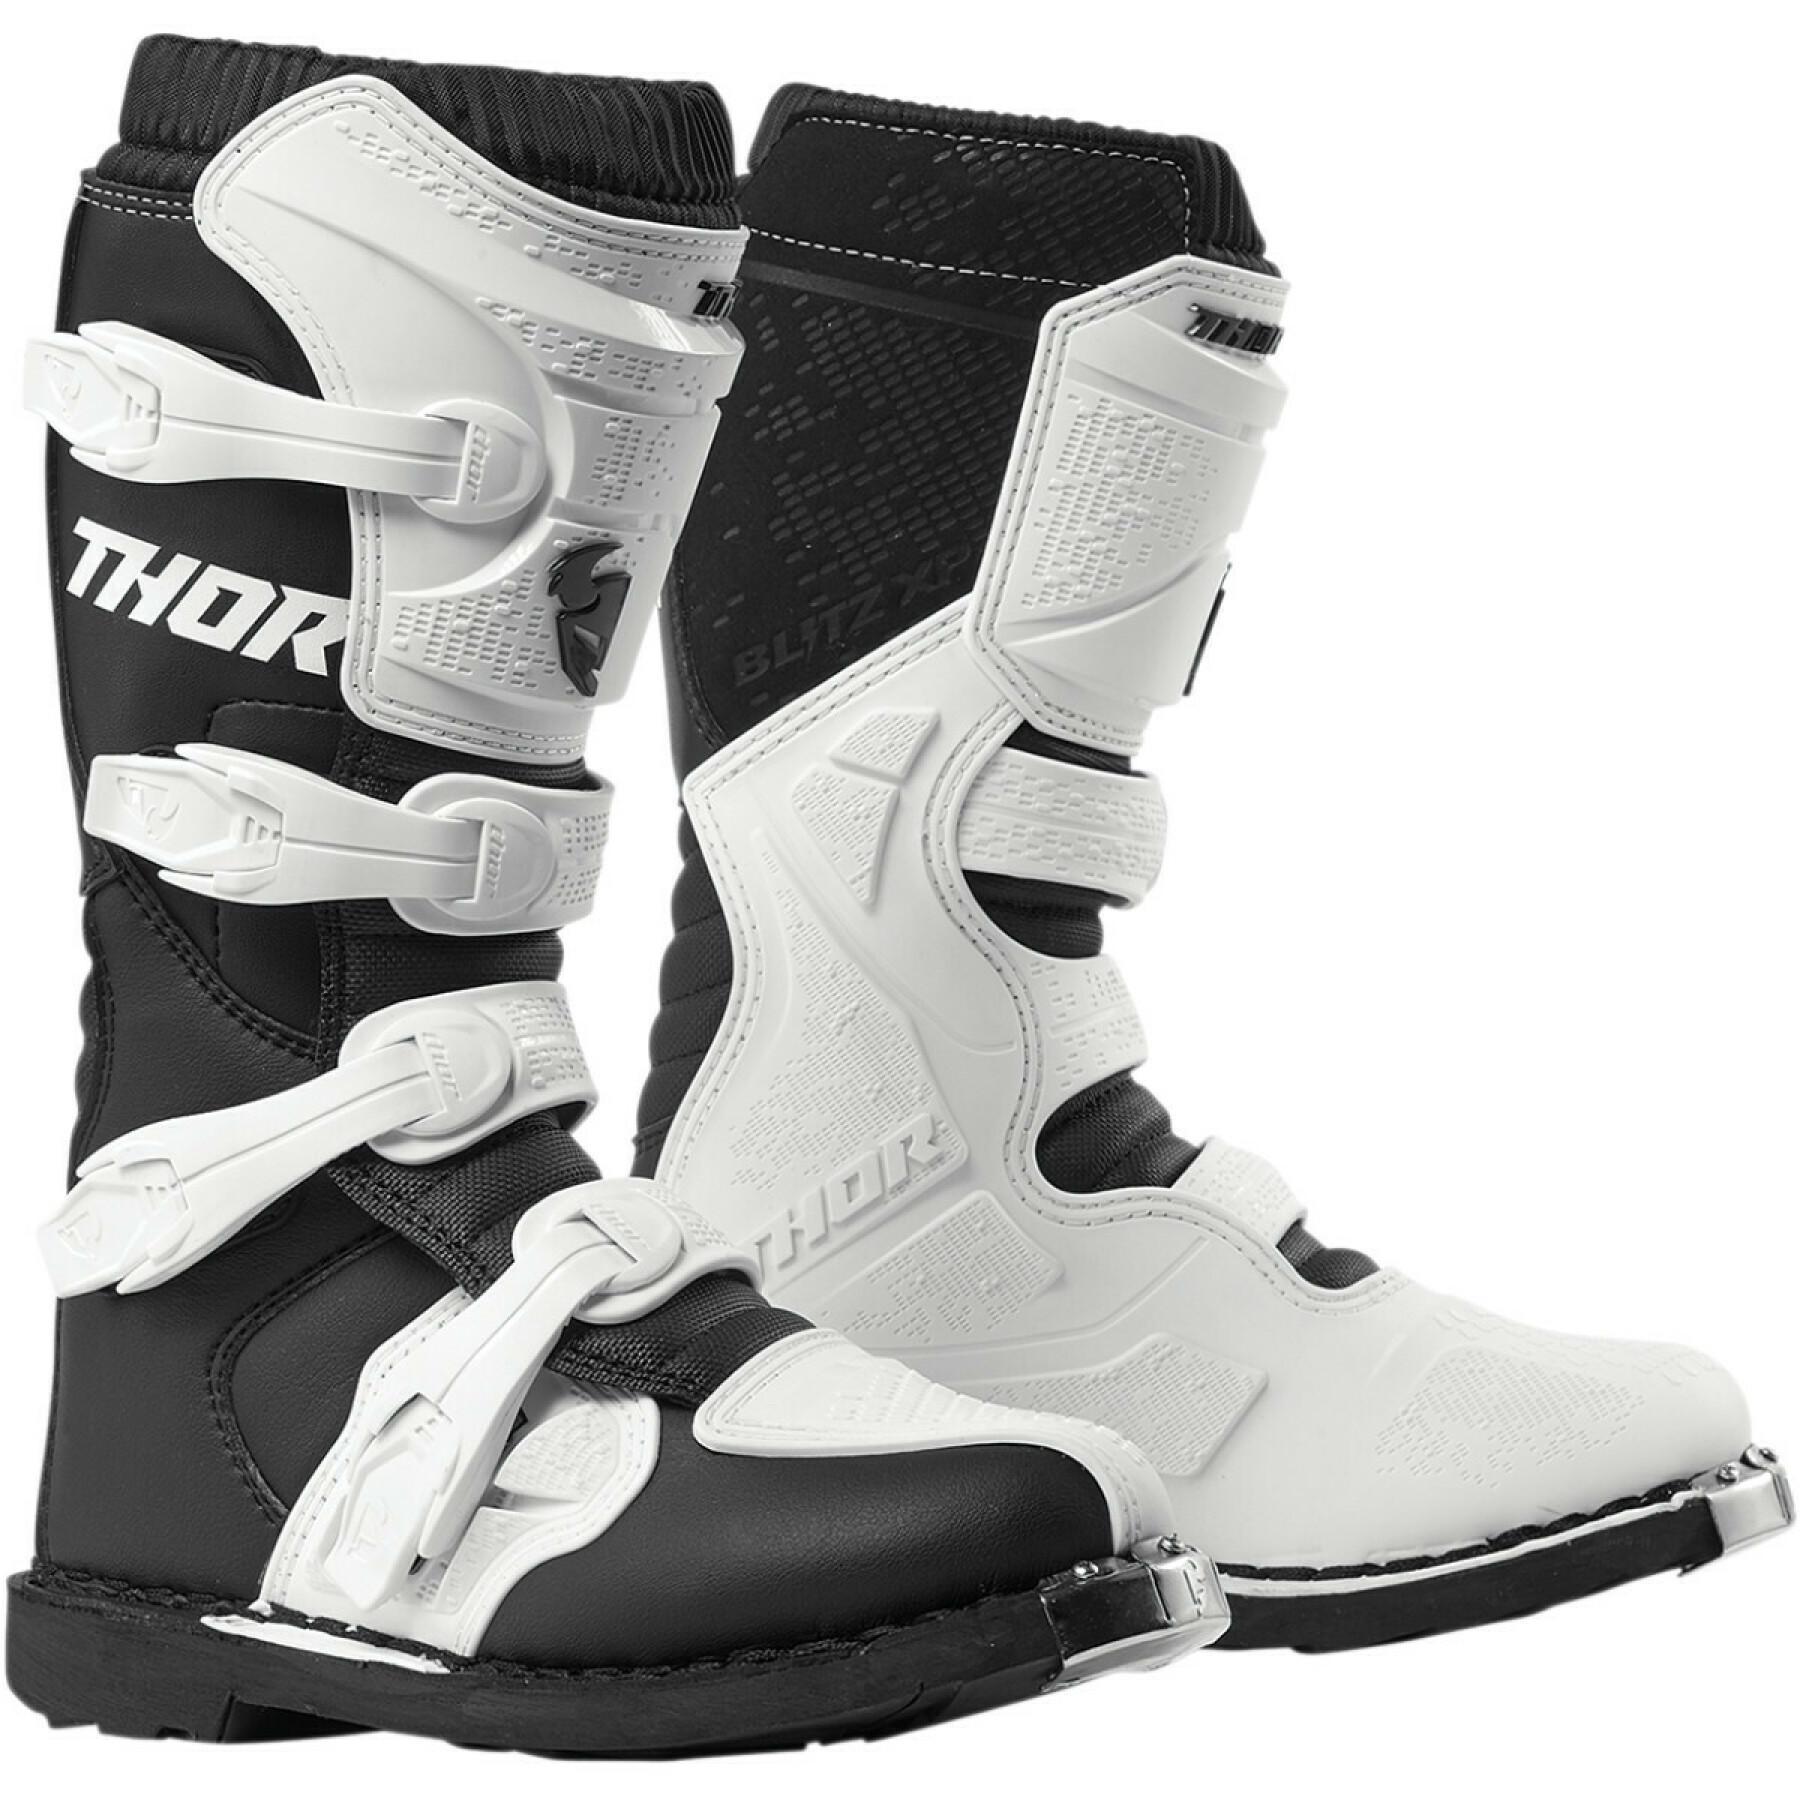 Women's cross boots Thor blitz XP